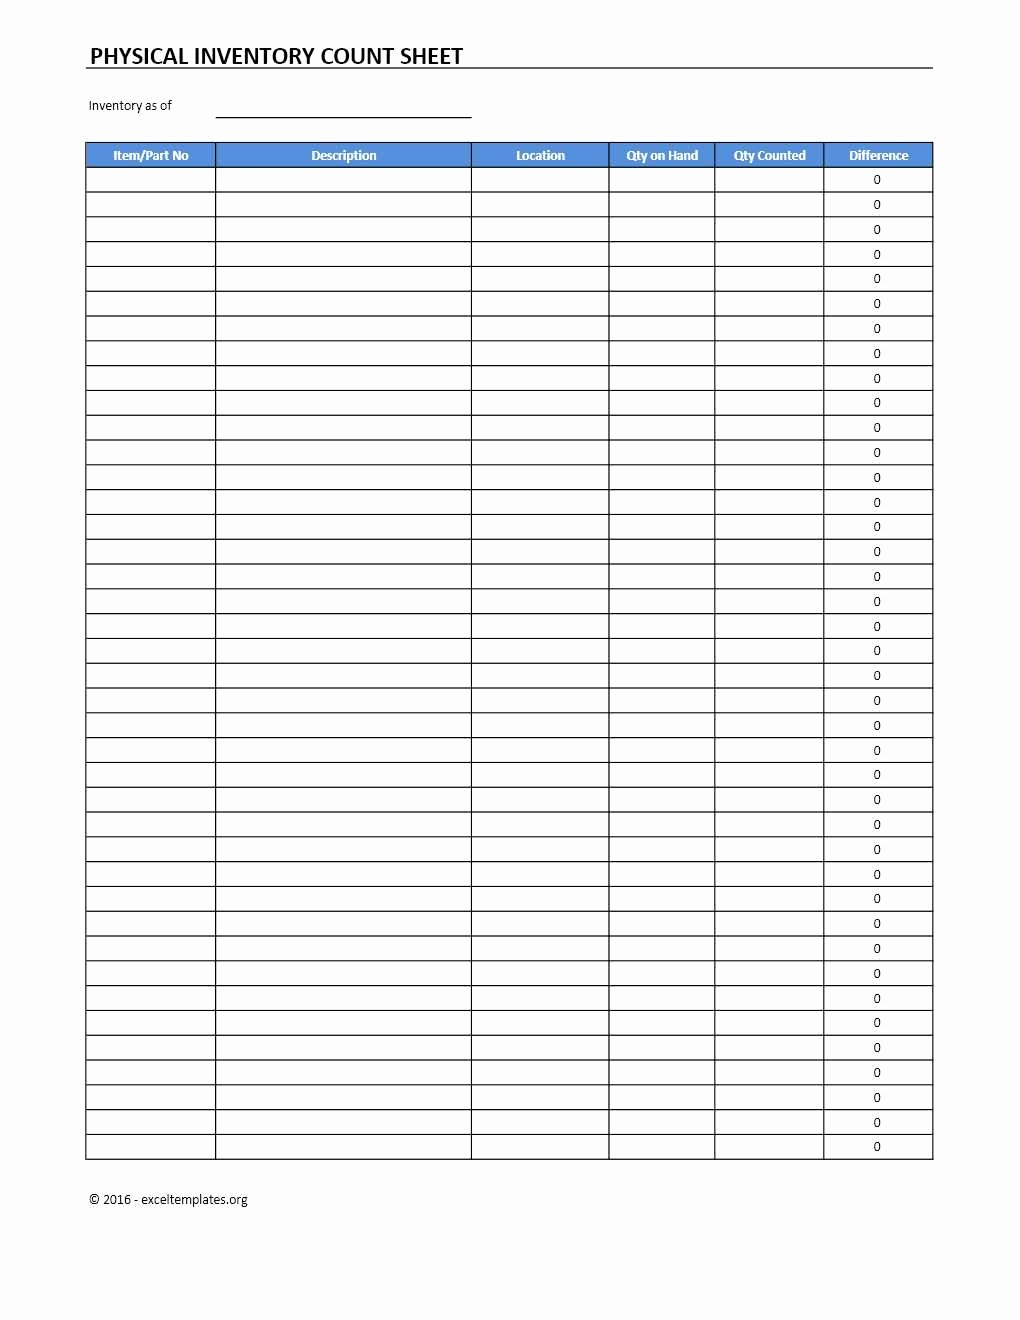 Inventory Log Sheet Excel Template Fresh Physical Inventory Count Sheet Template